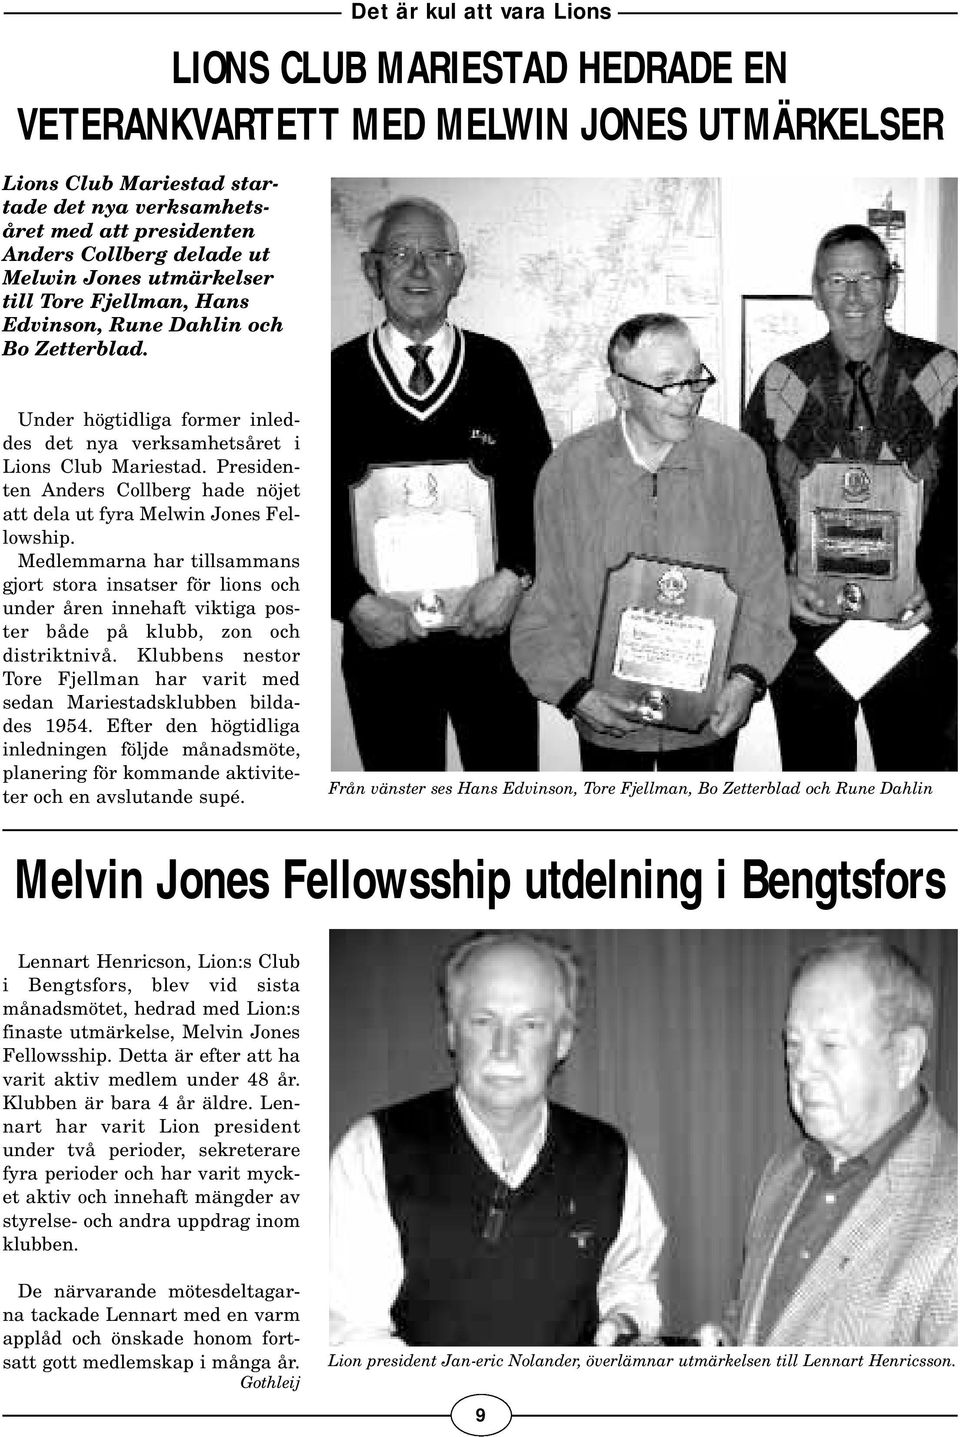 Presidenten Anders Collberg hade nöjet att dela ut fyra Melwin Jones Fellowship.